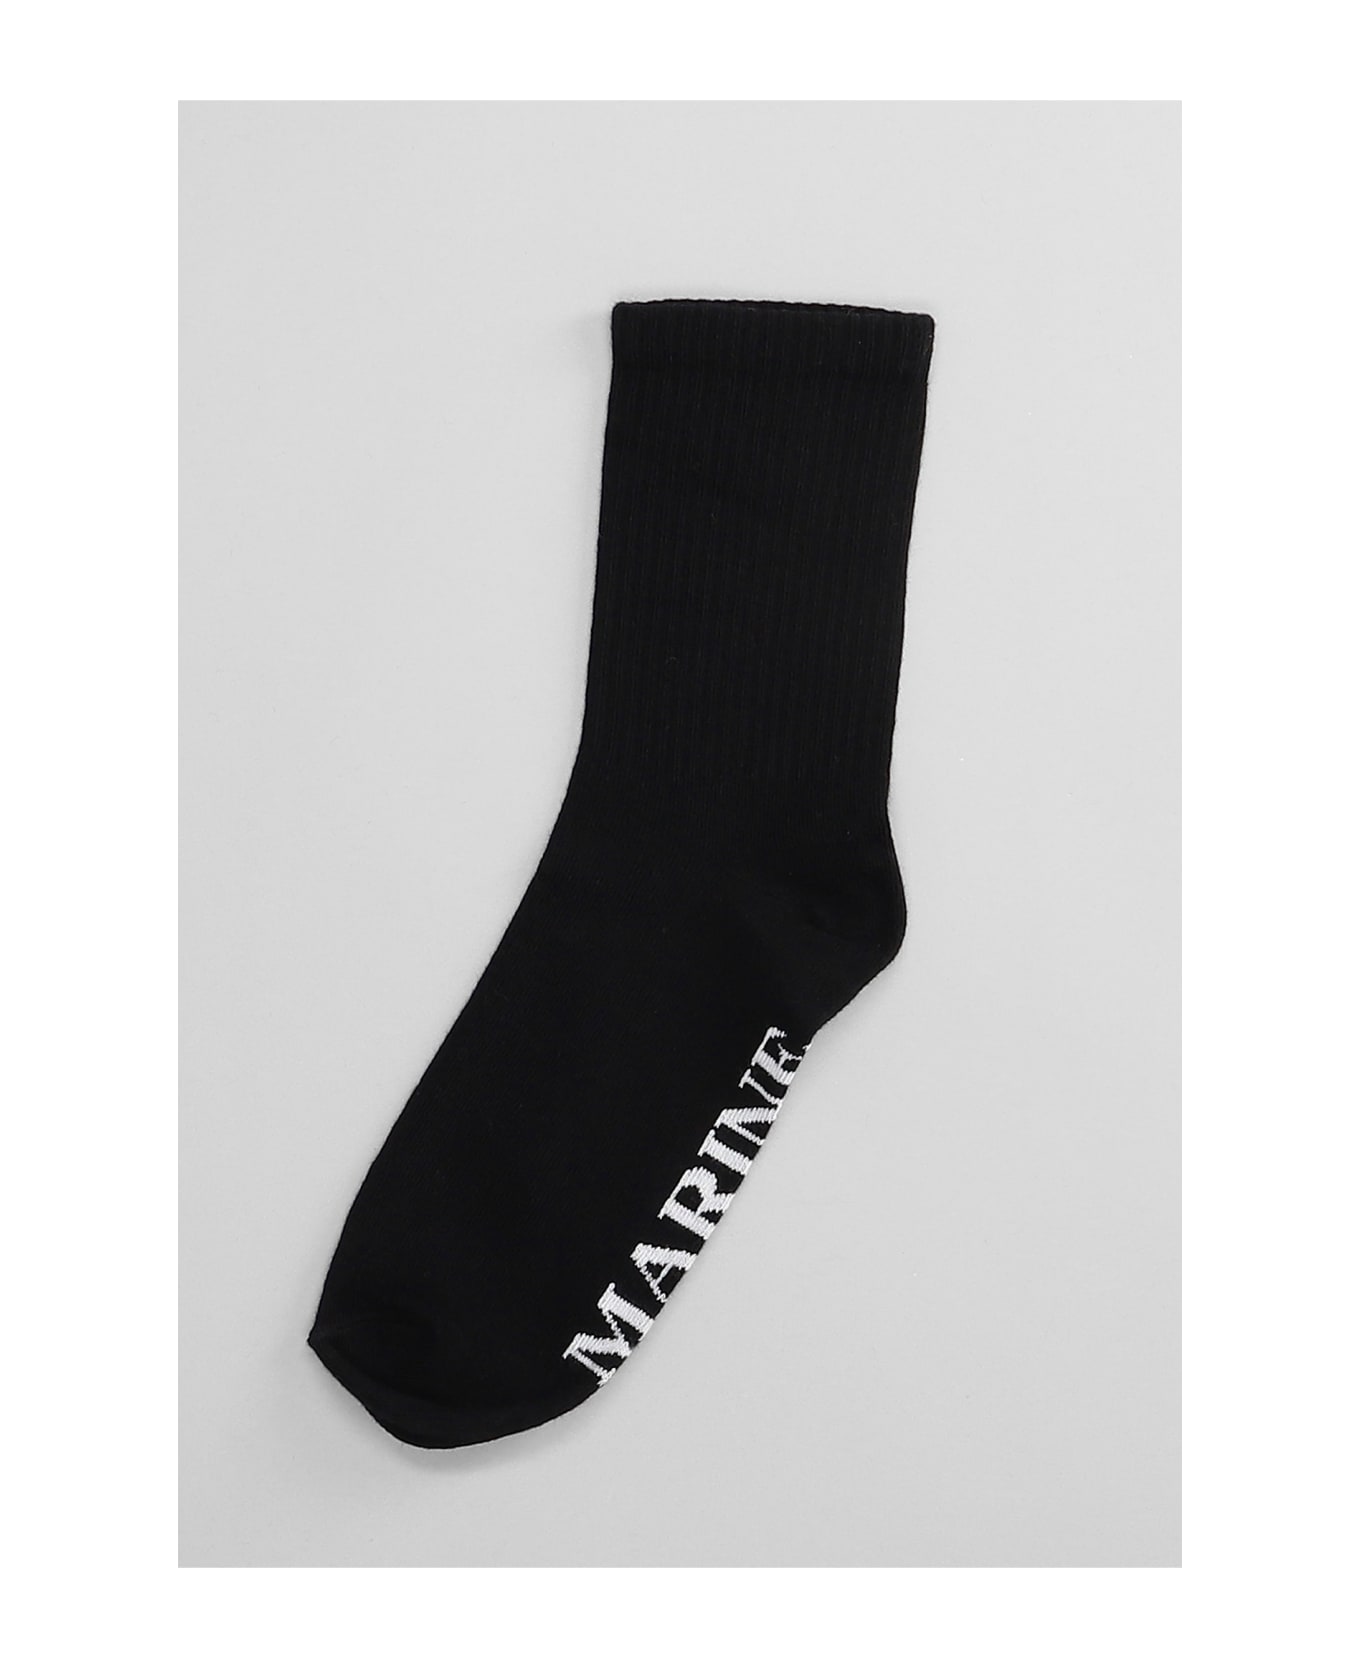 Marine Serre Socks In Black Cotton 靴下